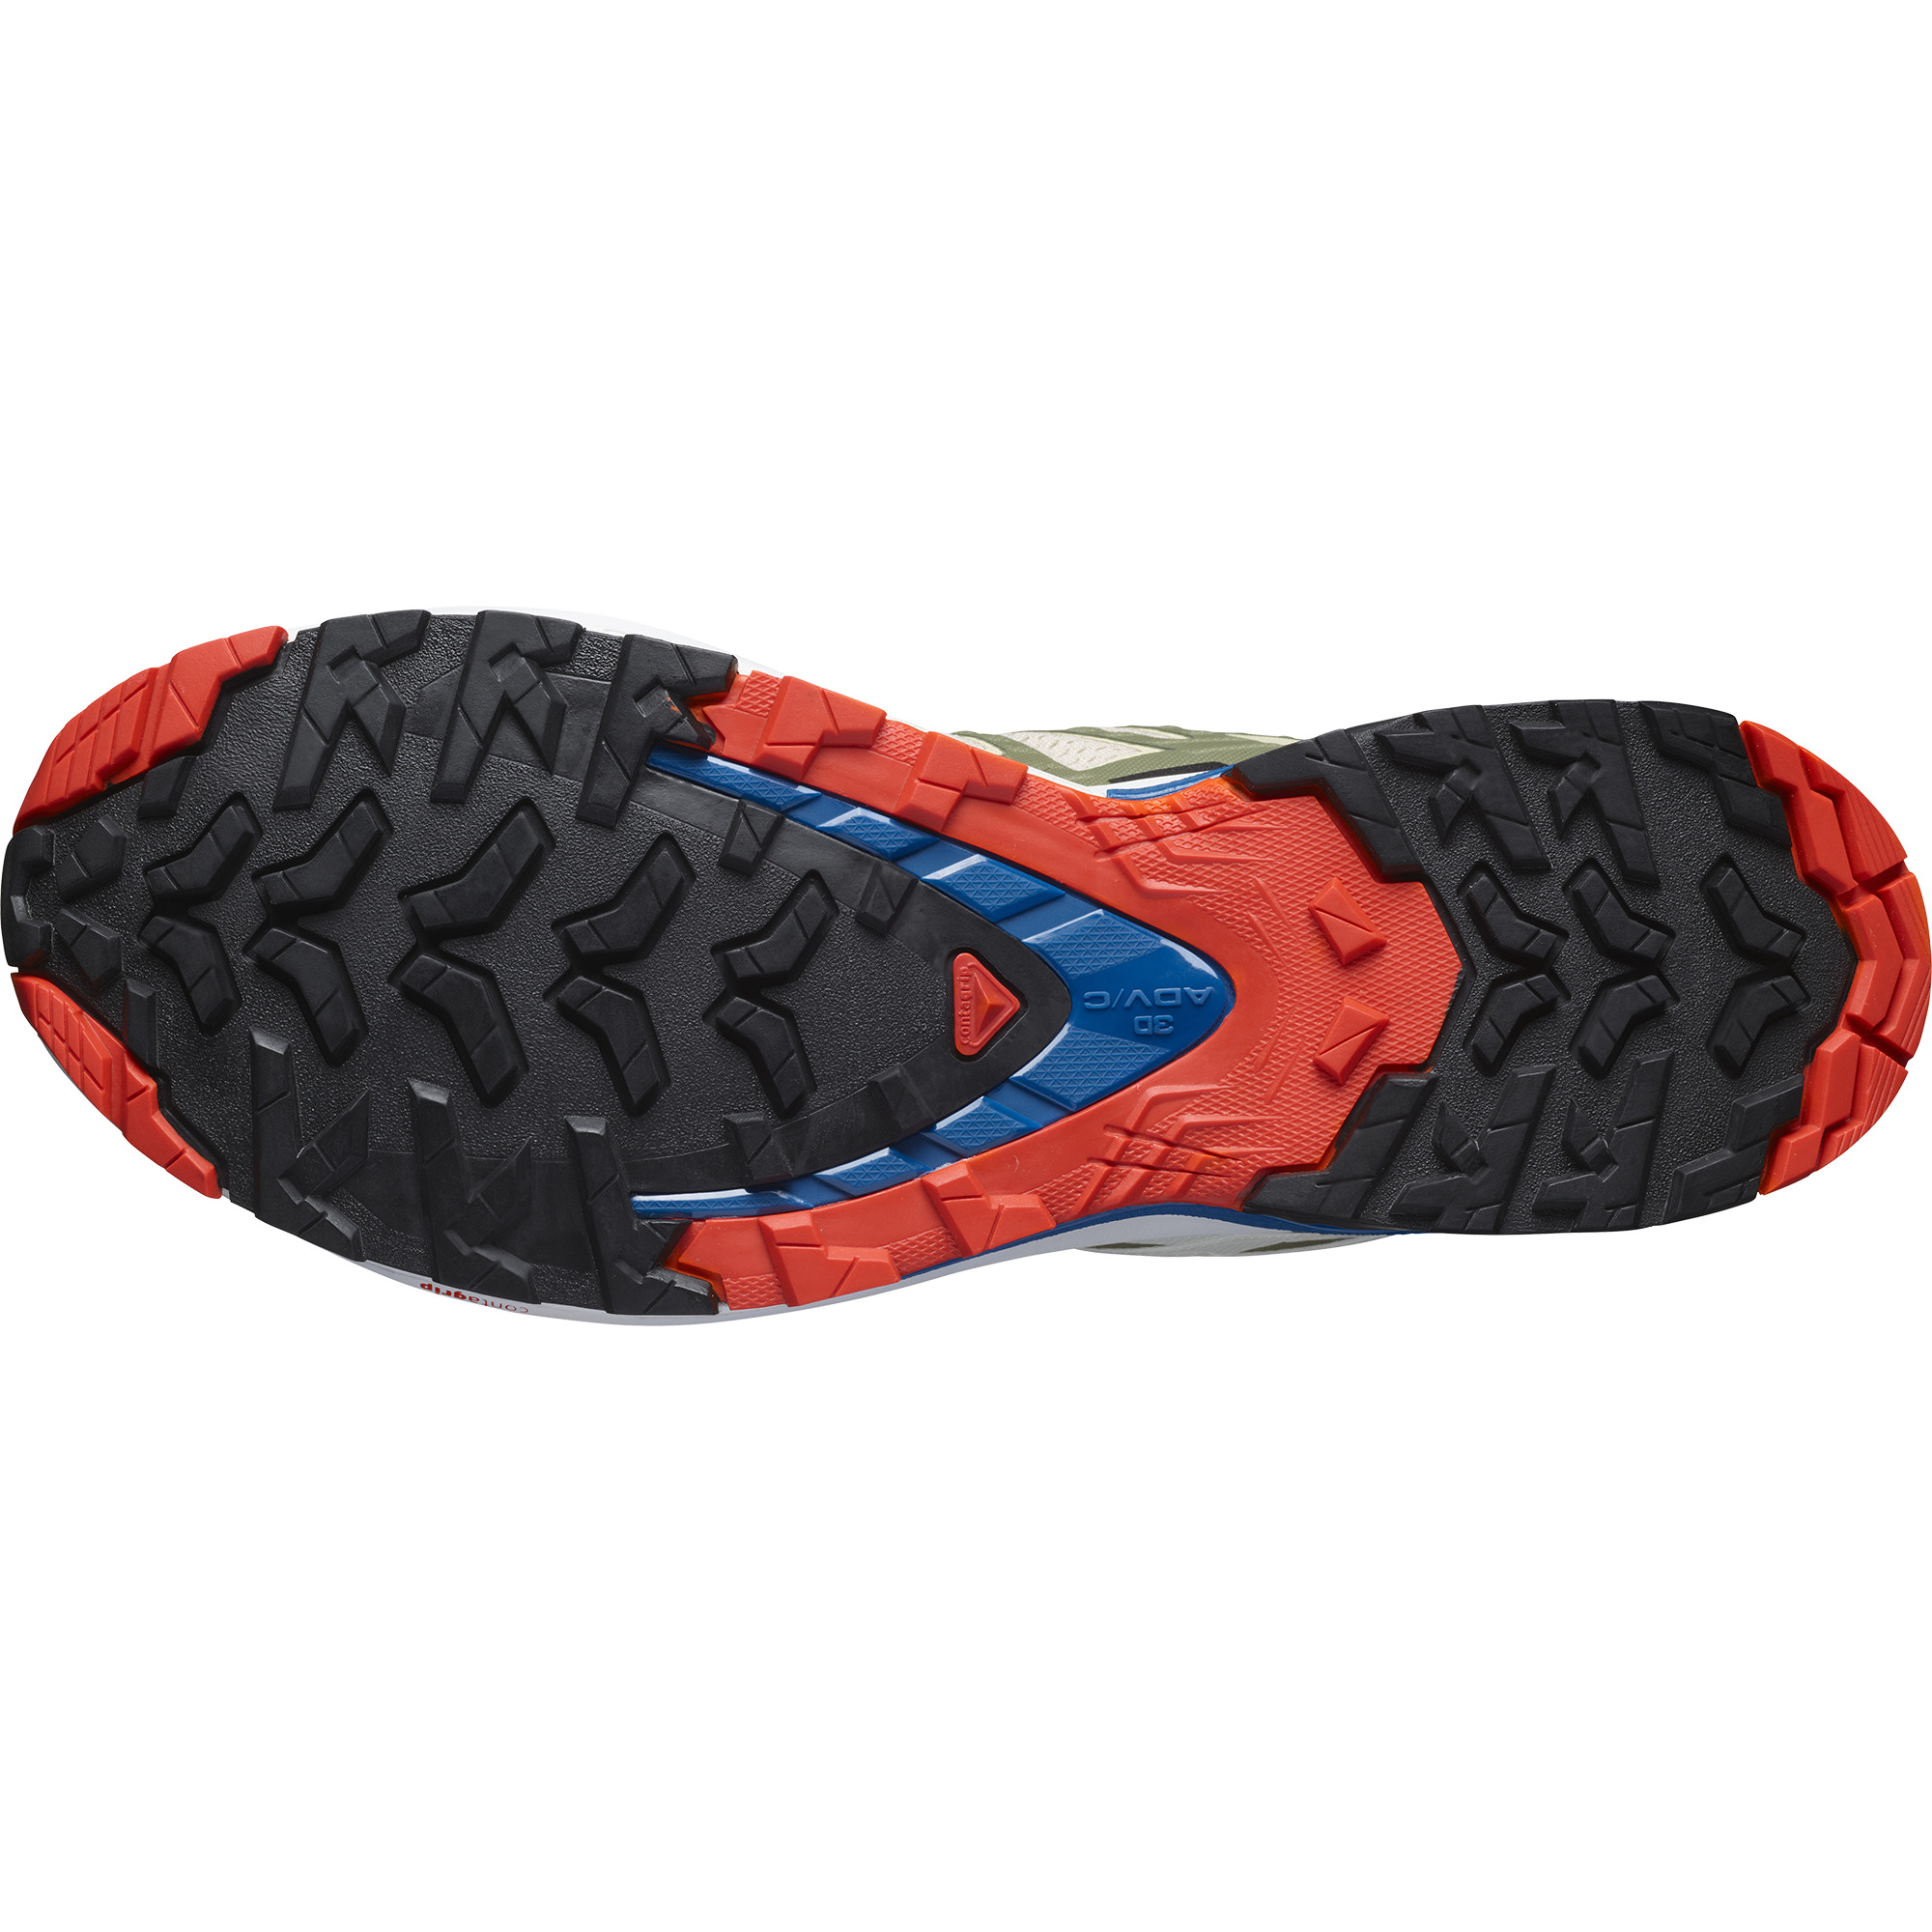 Xa Pro 3d V9 - Men's Trail Running Shoes